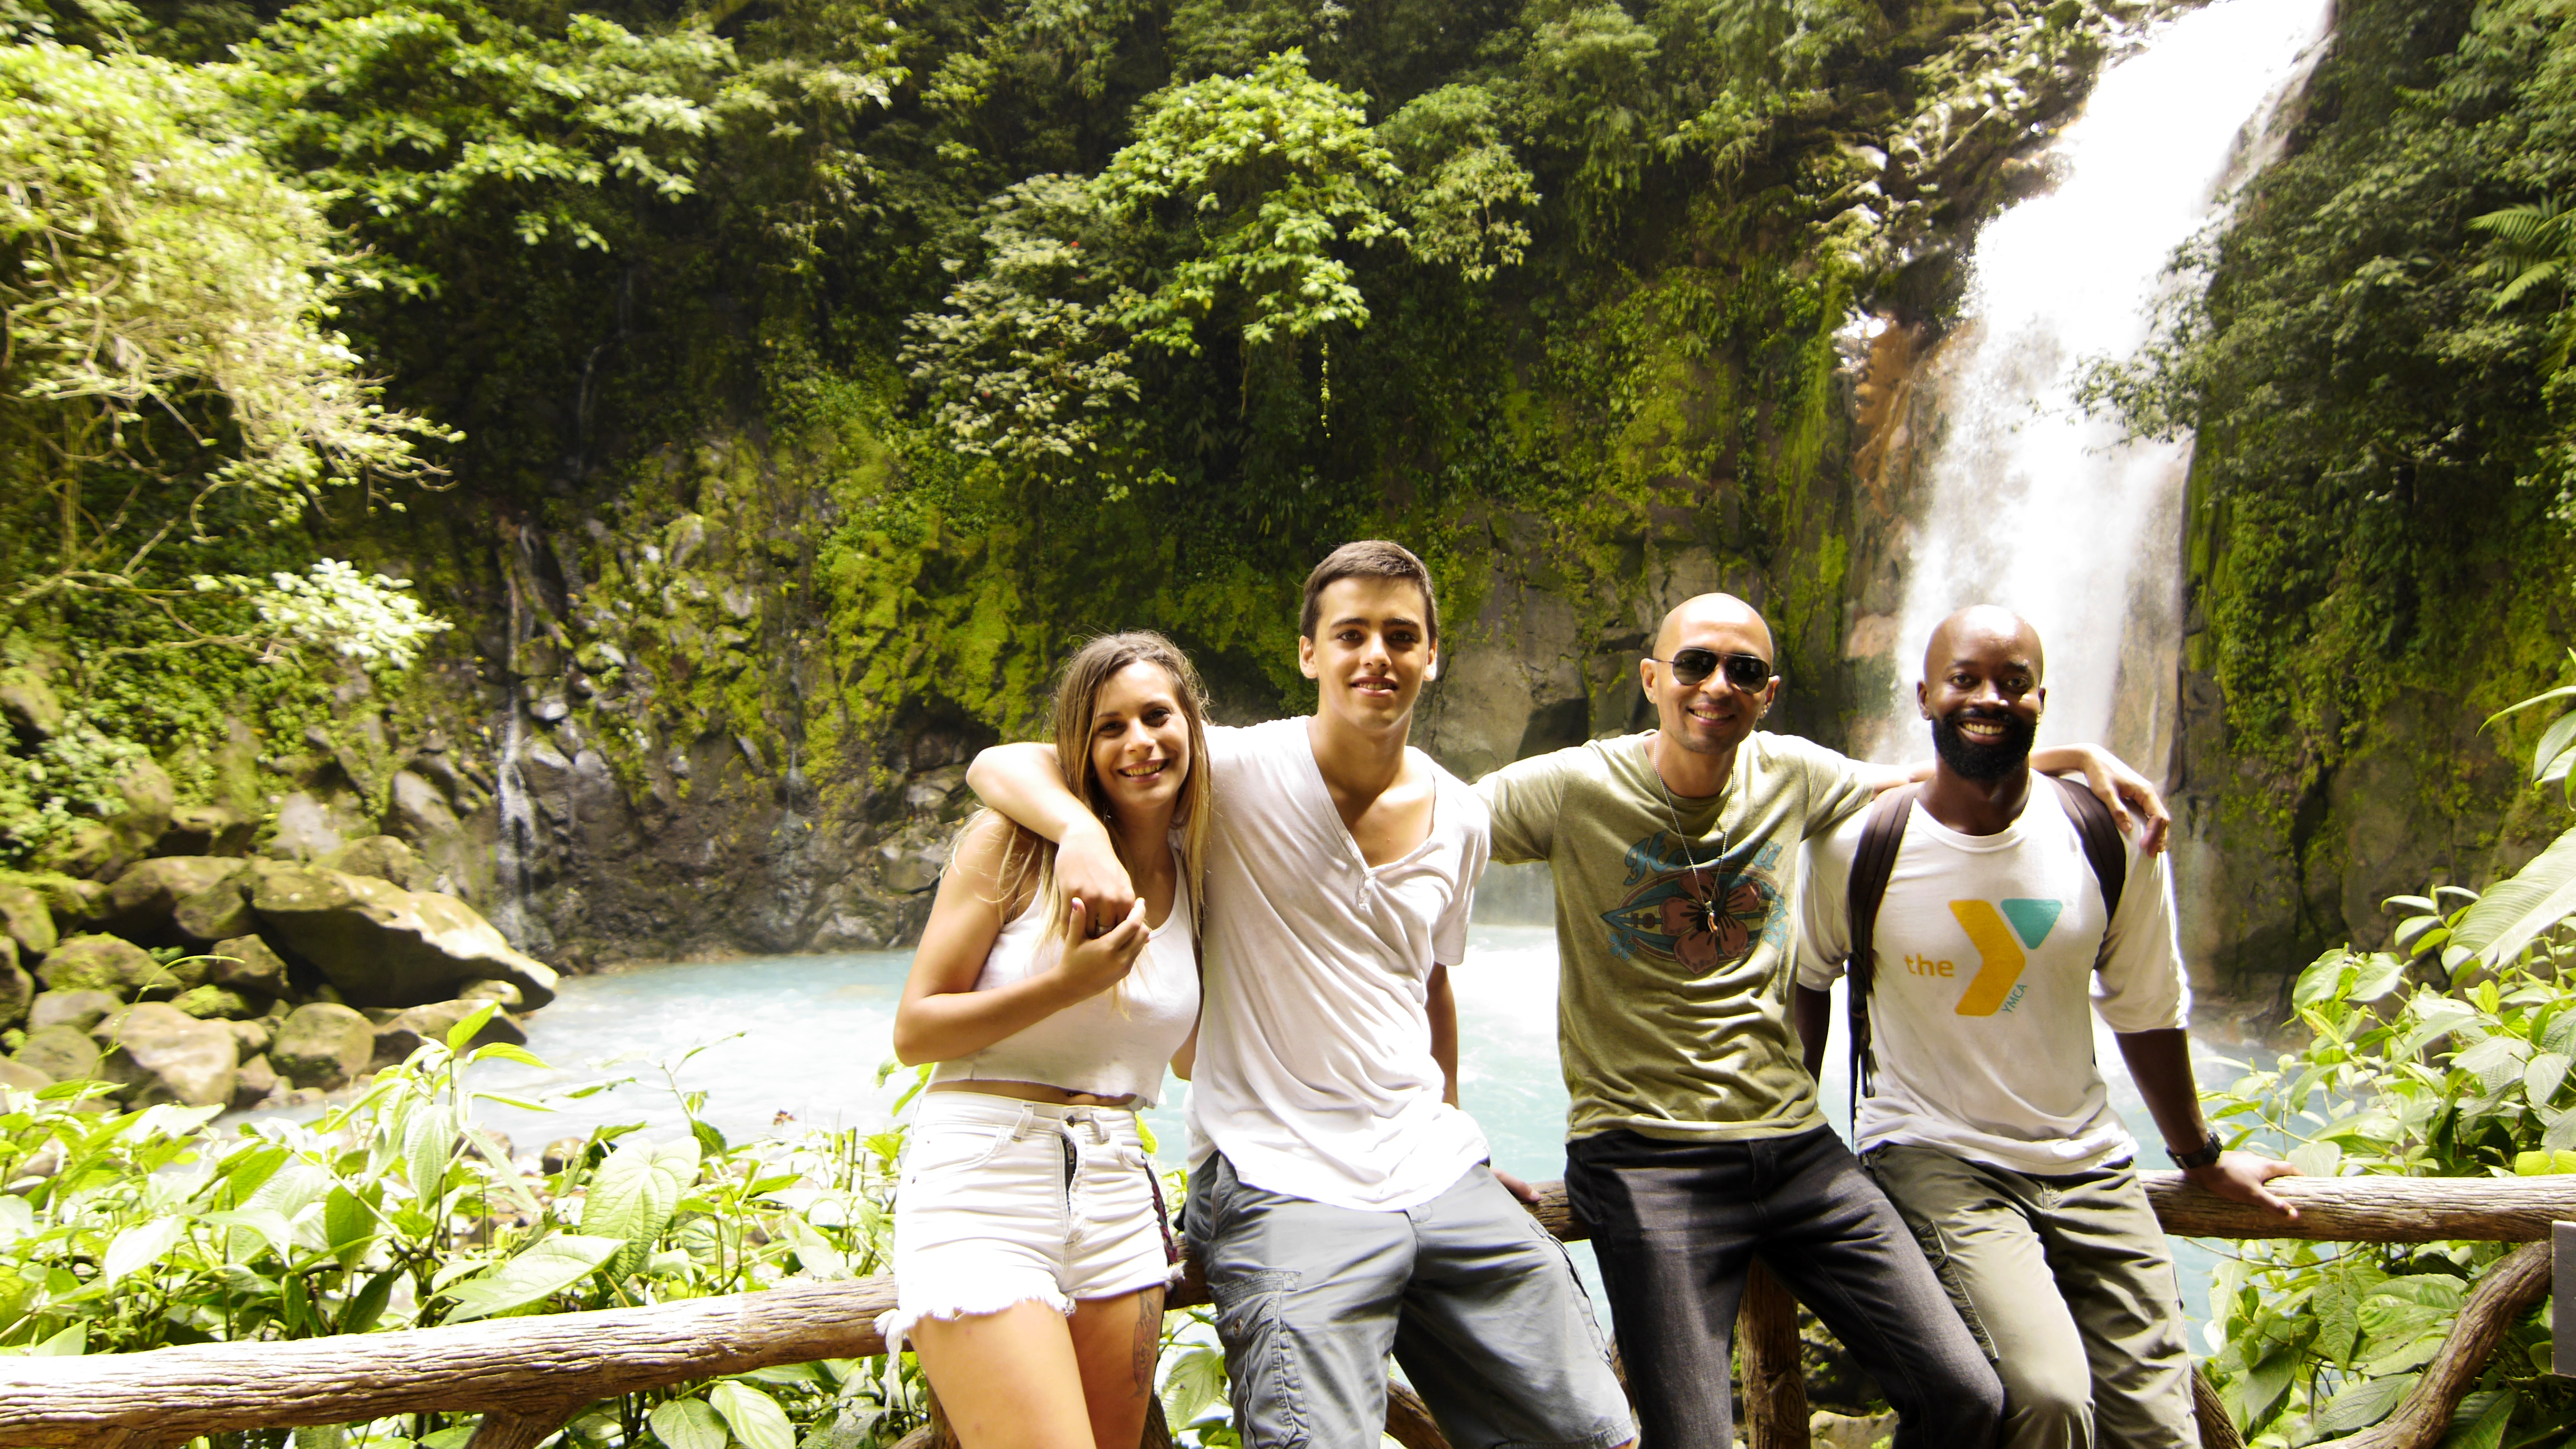 Belen Lois, Federico Suriani, Alejandro Plata, and Eli Lucas posing next to Rio Celesete Waterfall in Catarata de Rio Celeste, Costa Rica as seen on Travel Channel's Top Secret Waterfalls episode TTWF101H.